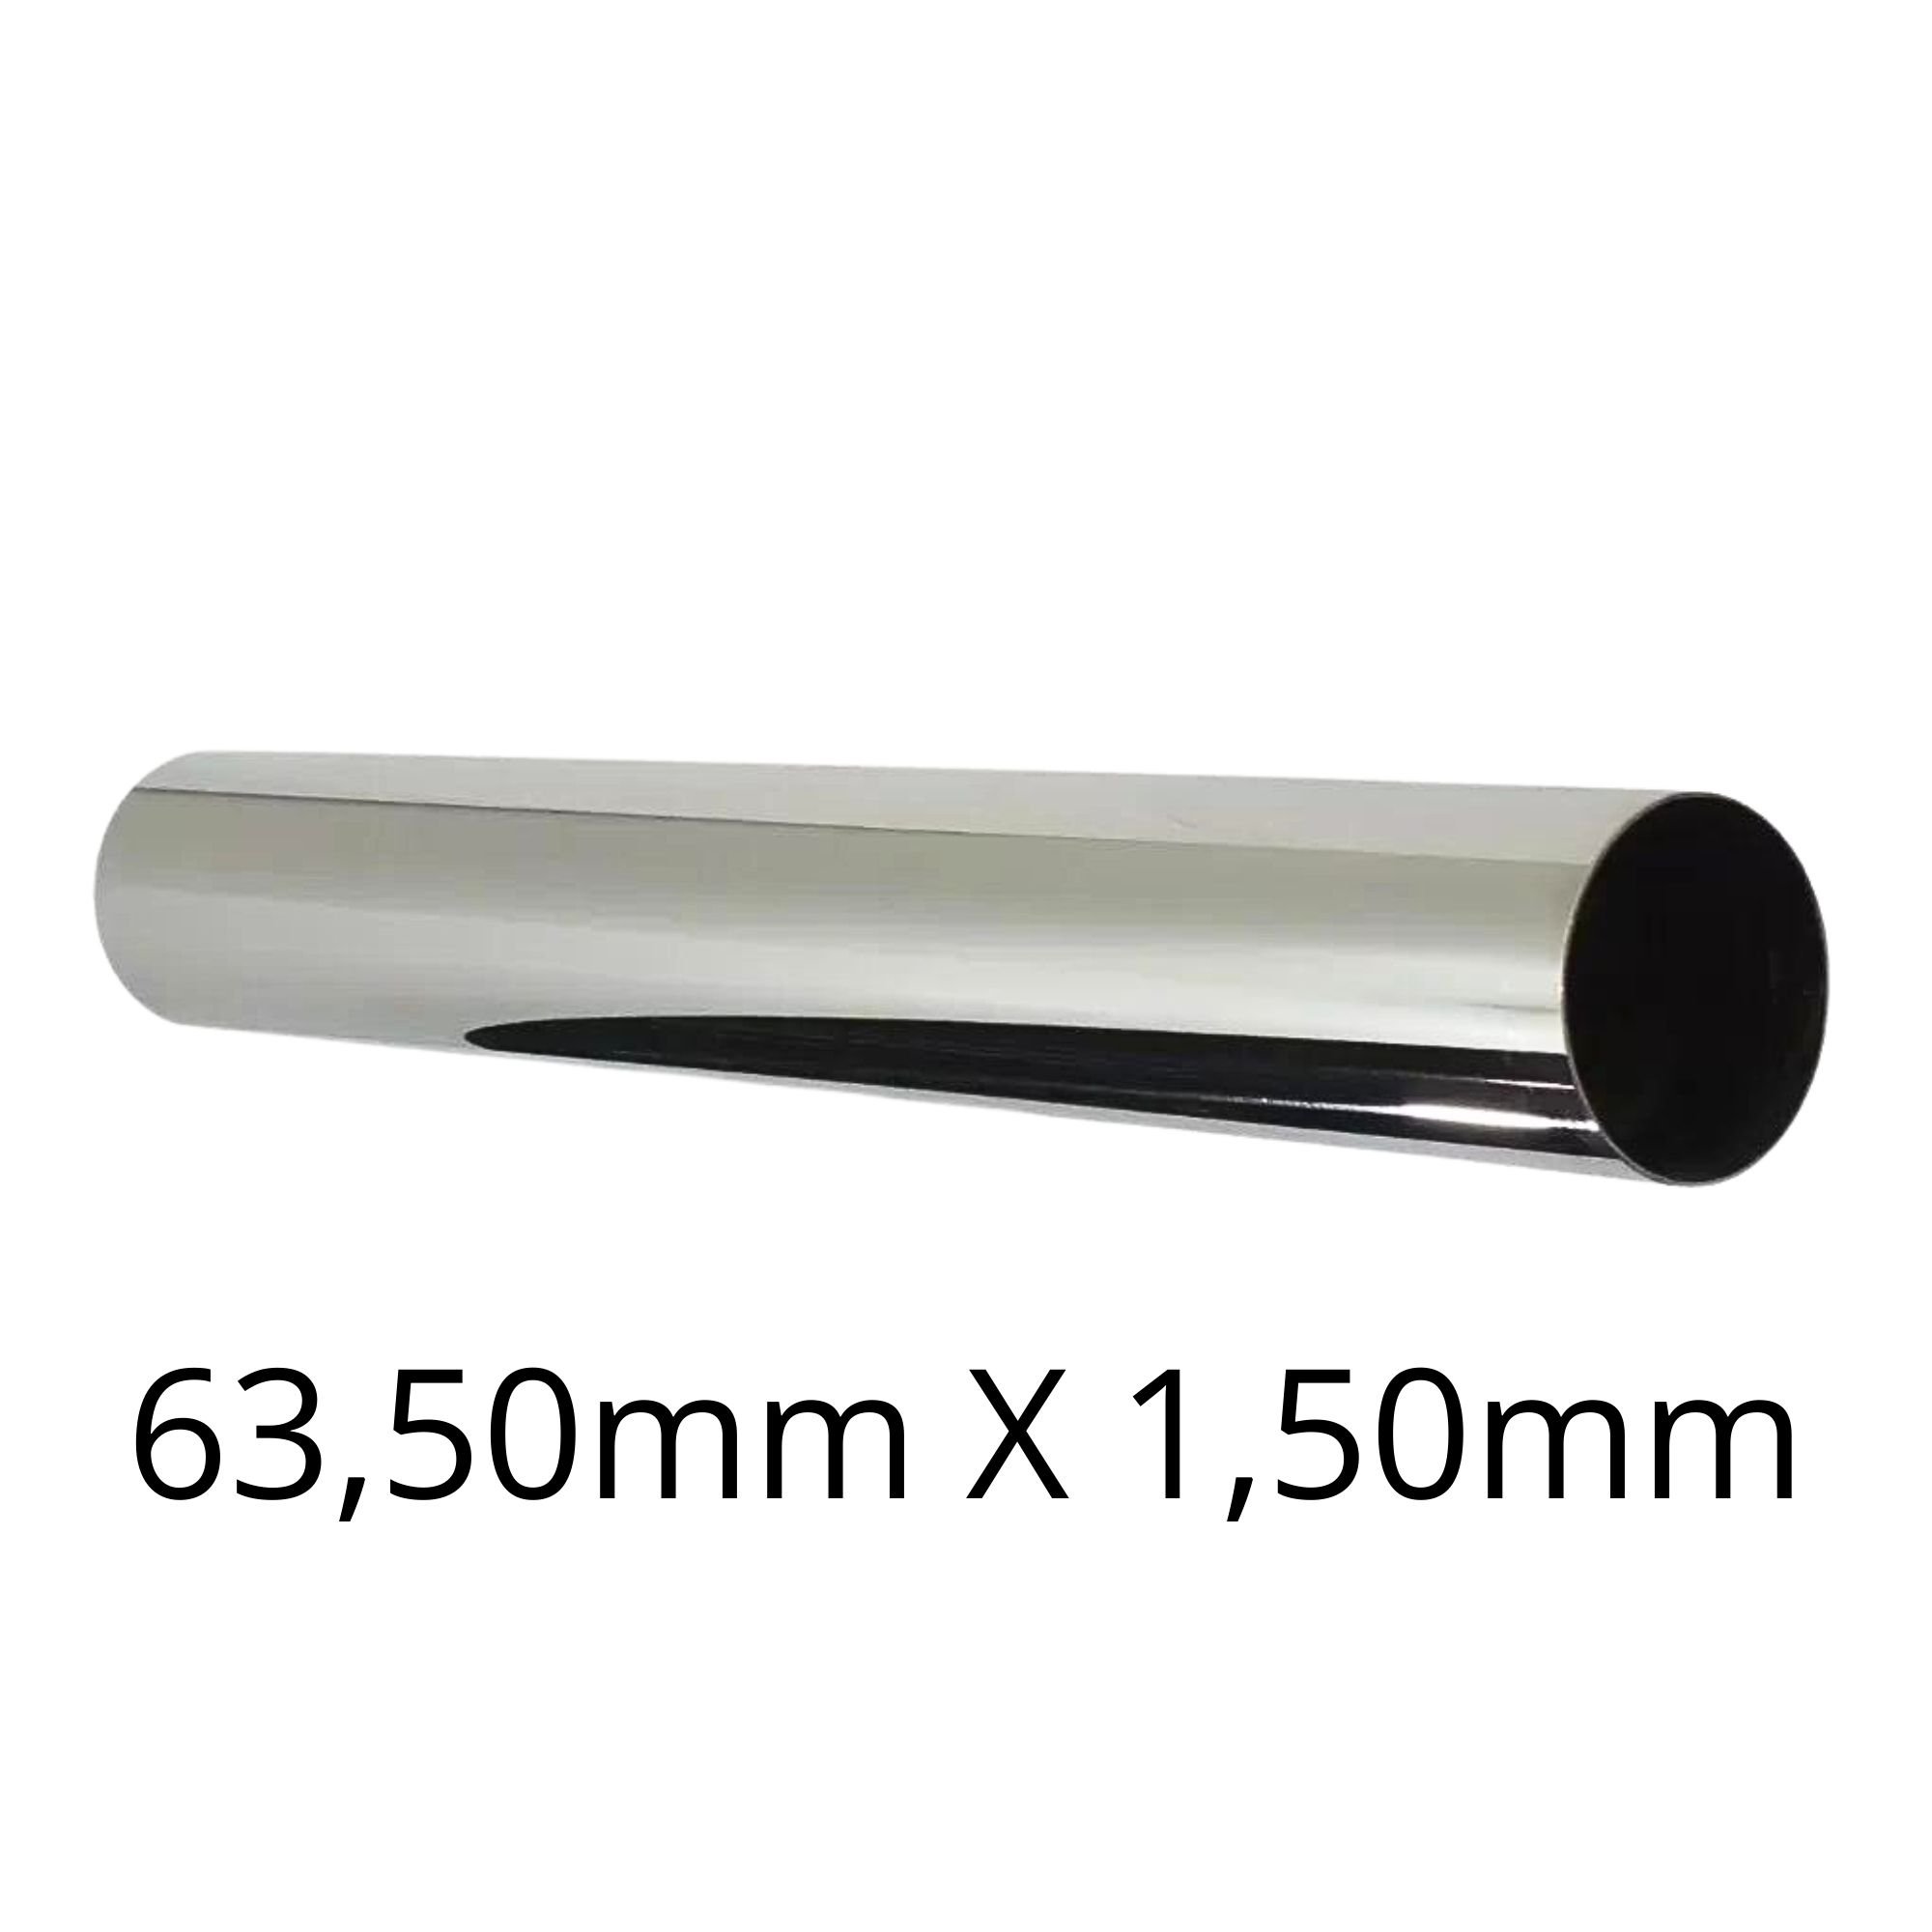 Tubo Inox - 63,50mm X 1,50mm - Polido - 304/l - C/c - 50 Cm - 4